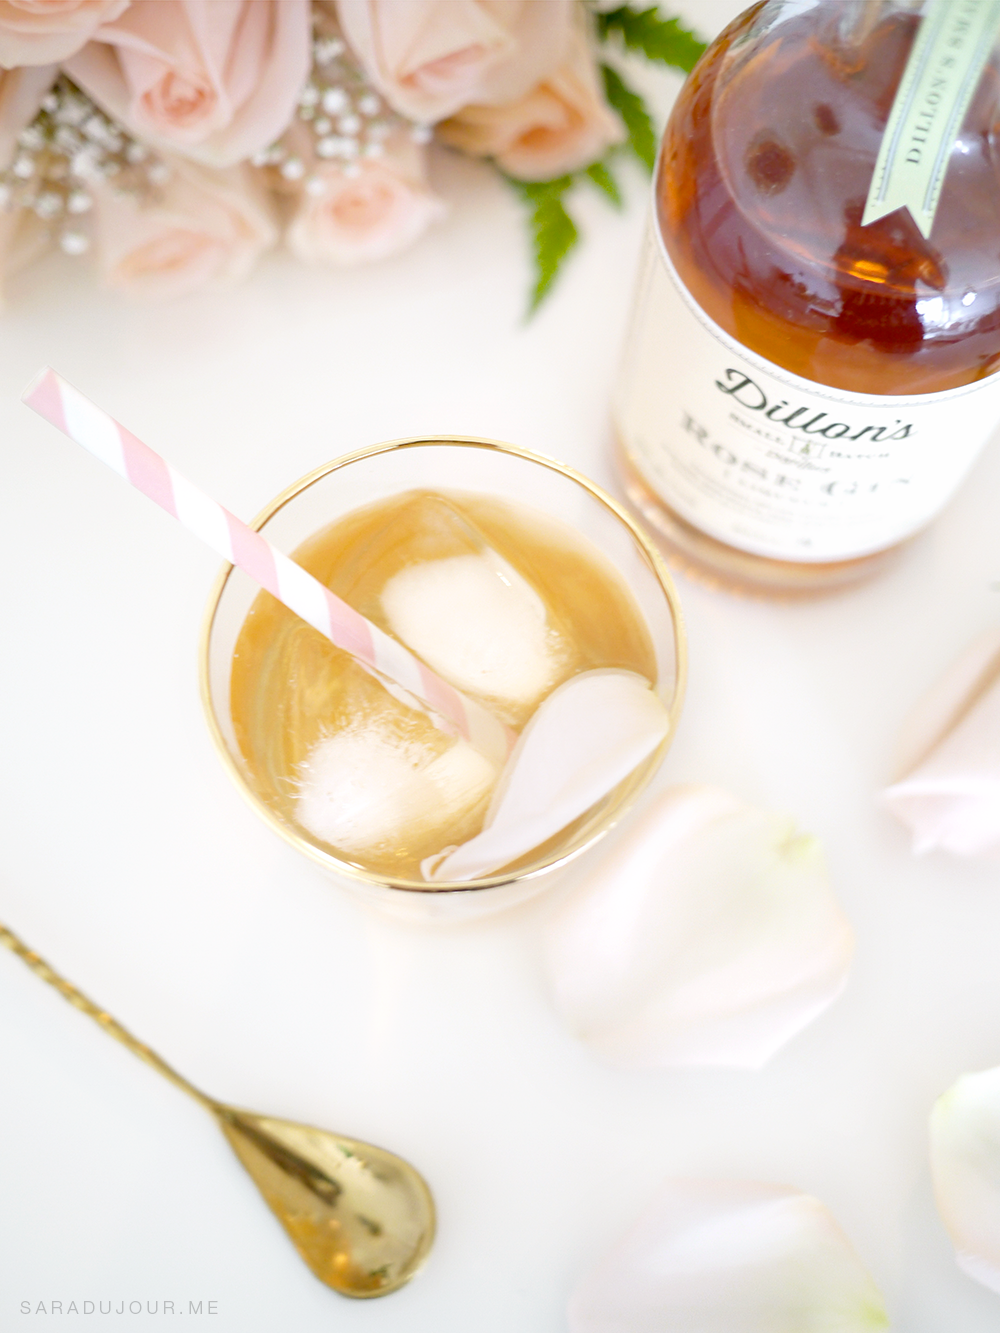 Dillon's Rose Gin and Tonic Cocktail Recipe | Sara du Jour